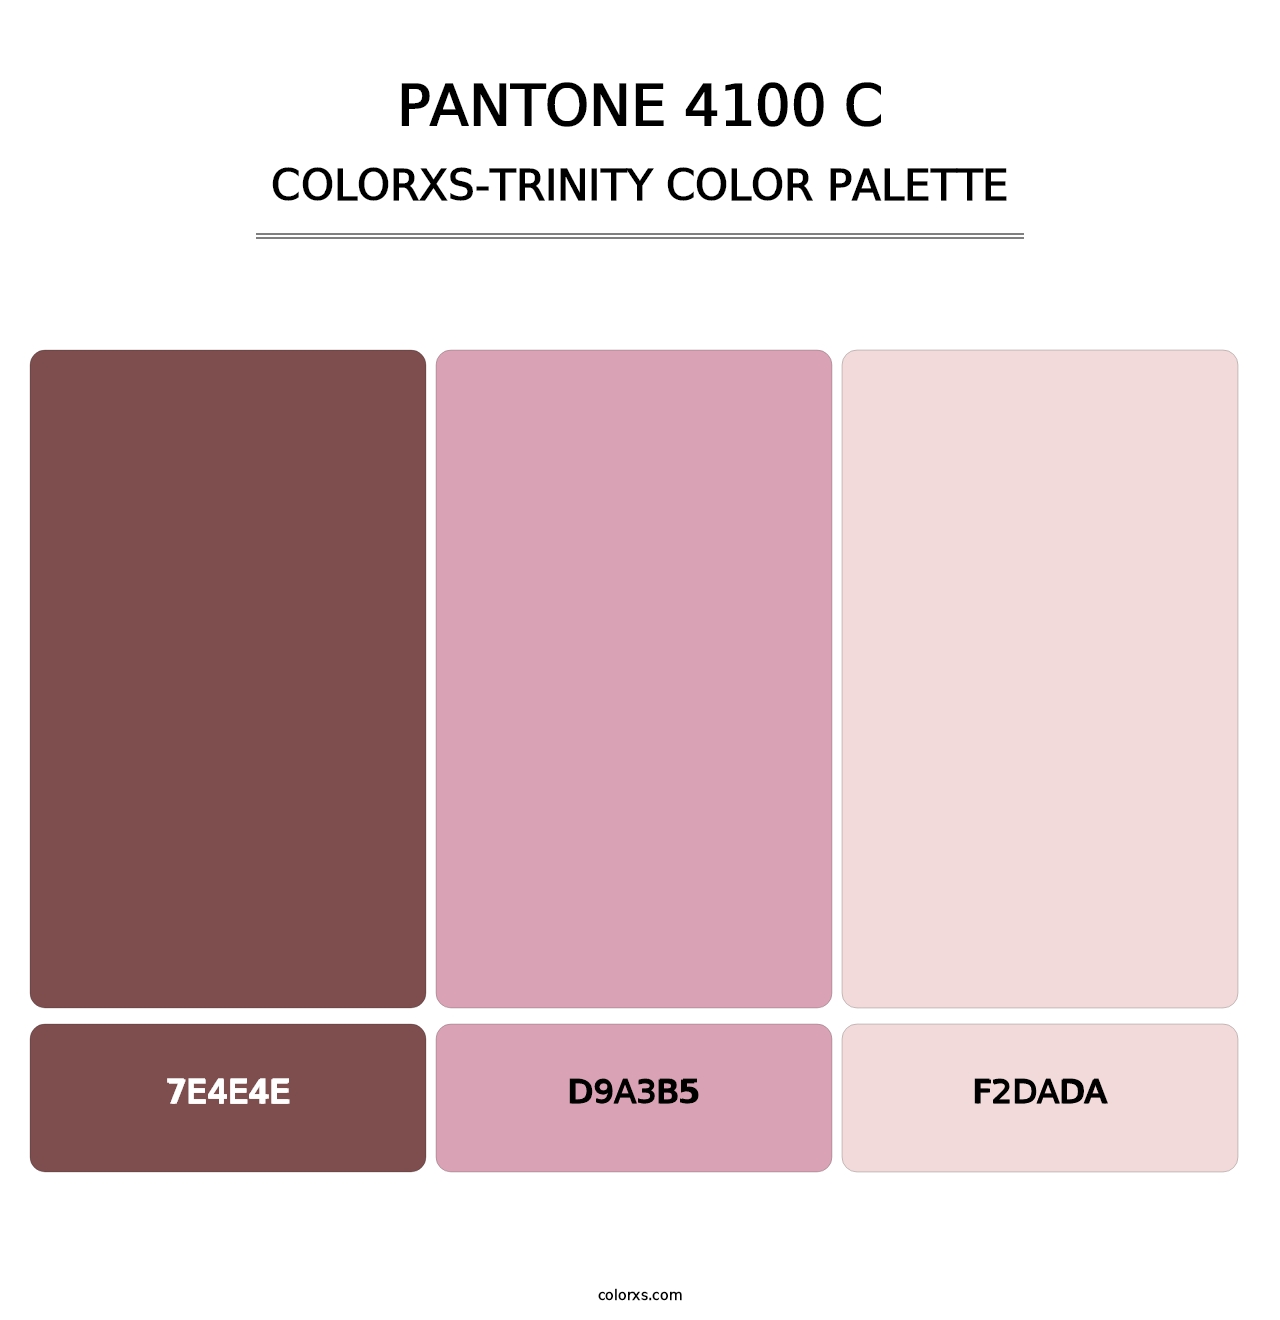 PANTONE 4100 C - Colorxs Trinity Palette